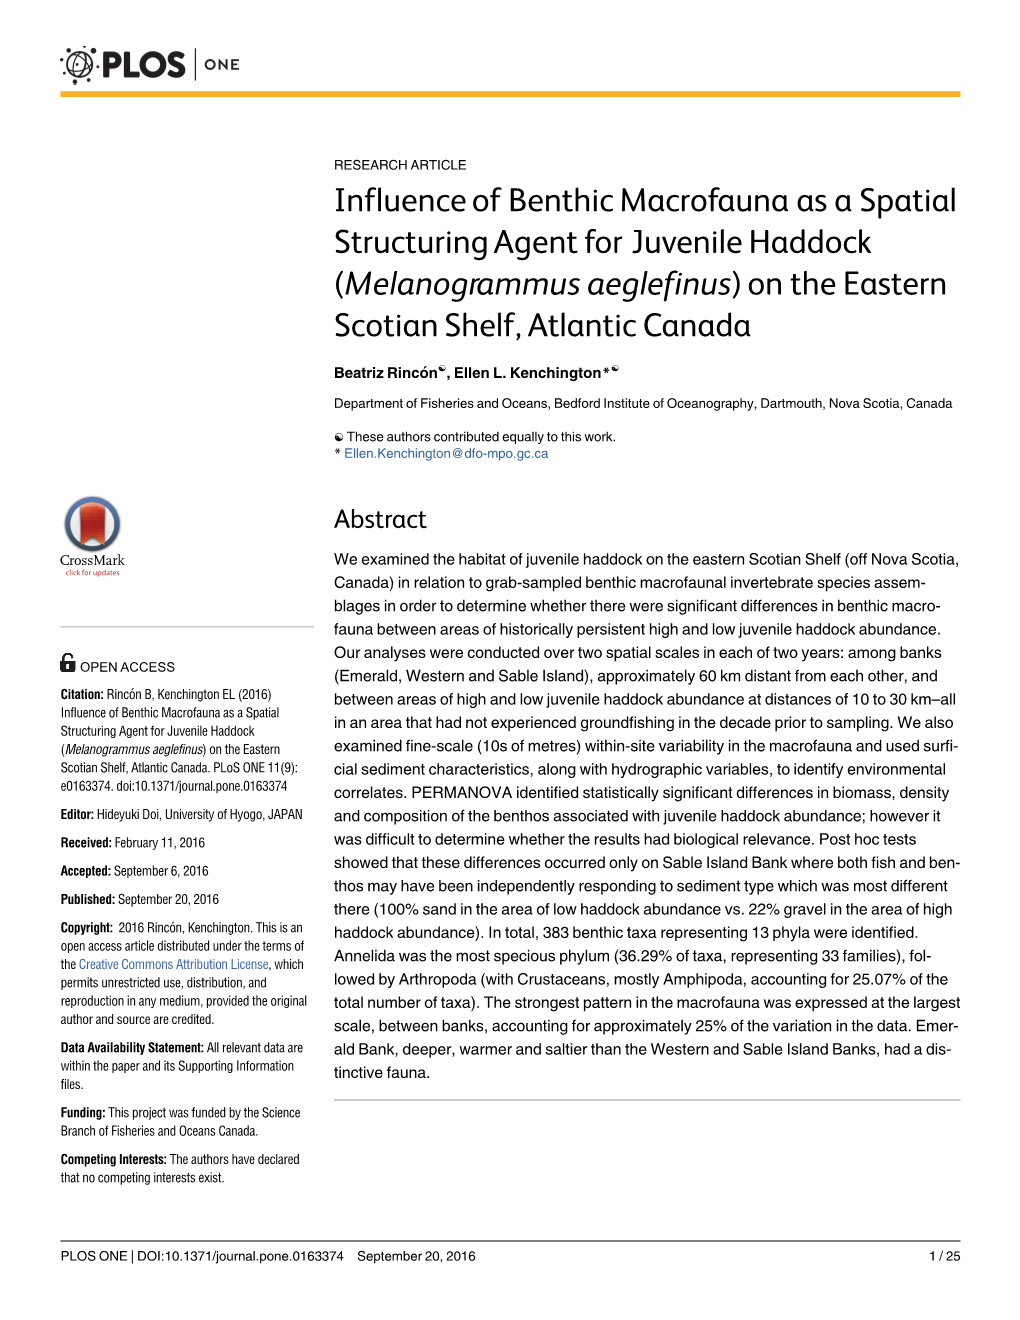 Influence of Benthic Macrofauna As a Spatial Structuring Agent for Juvenile Haddock (Melanogrammus Aeglefinus) on the Eastern Scotian Shelf, Atlantic Canada